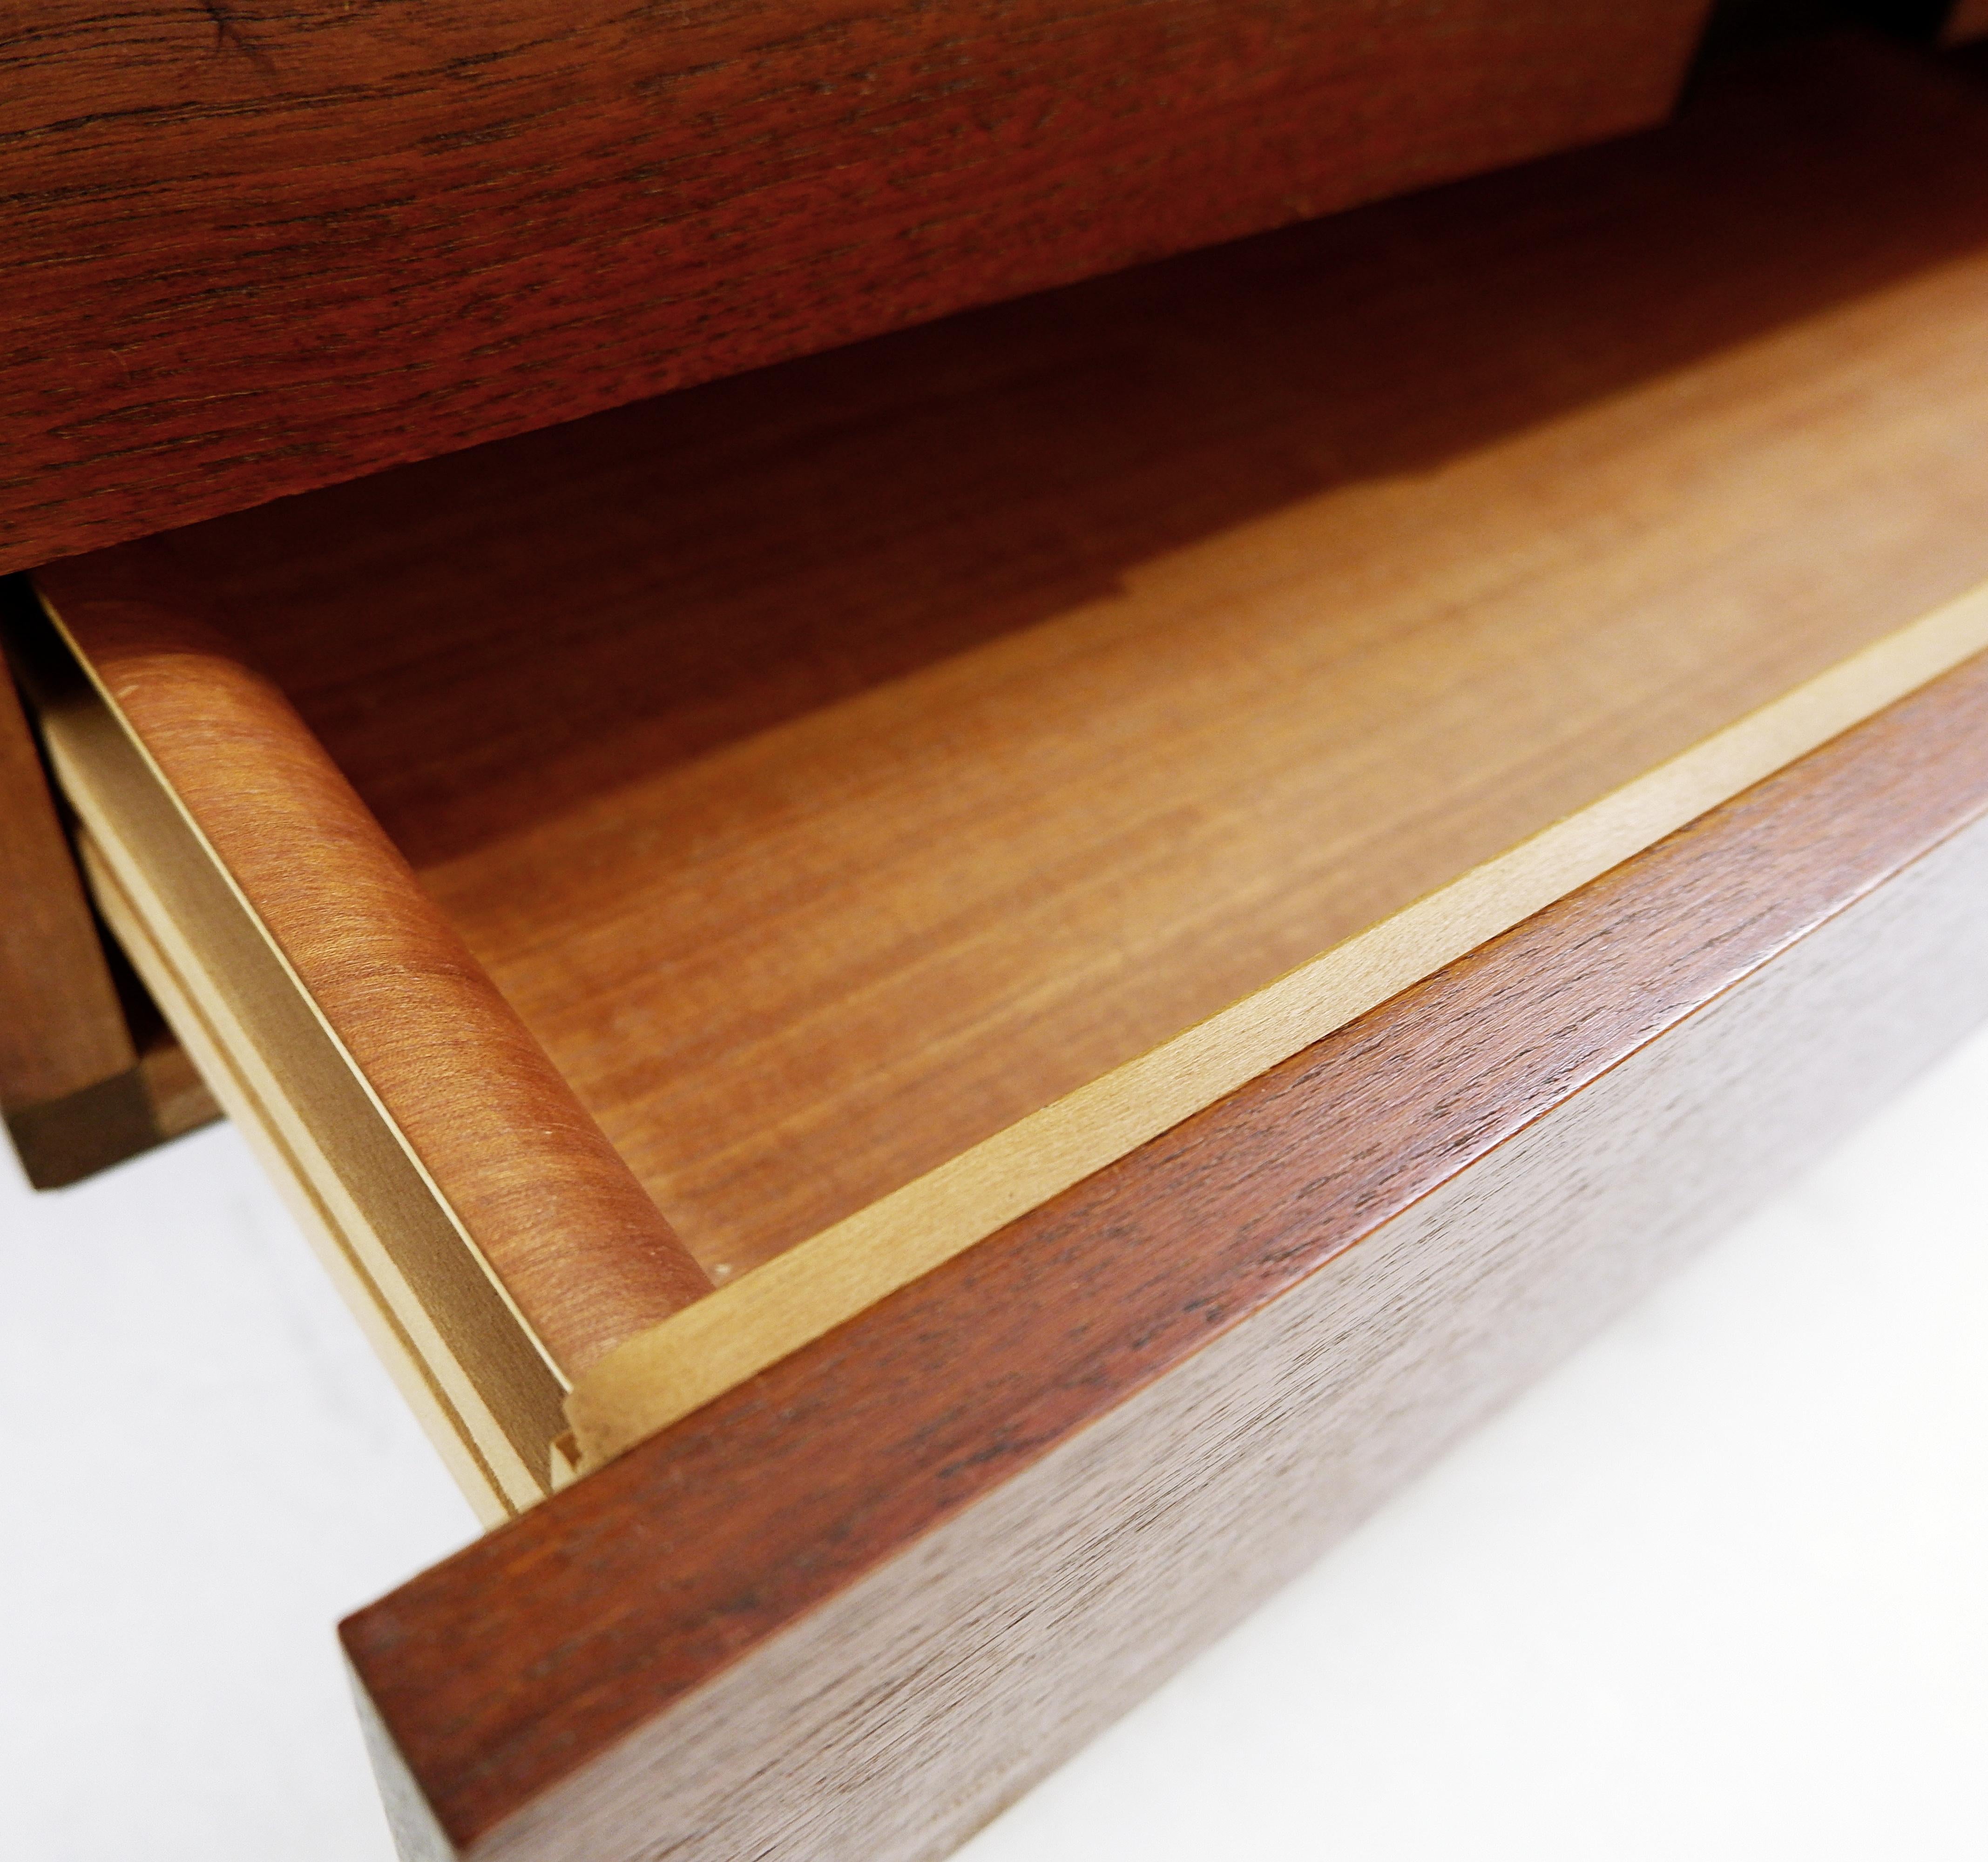 Wood Midcentury Sideboard from the Japanese by Cees Braakman, Pastoe